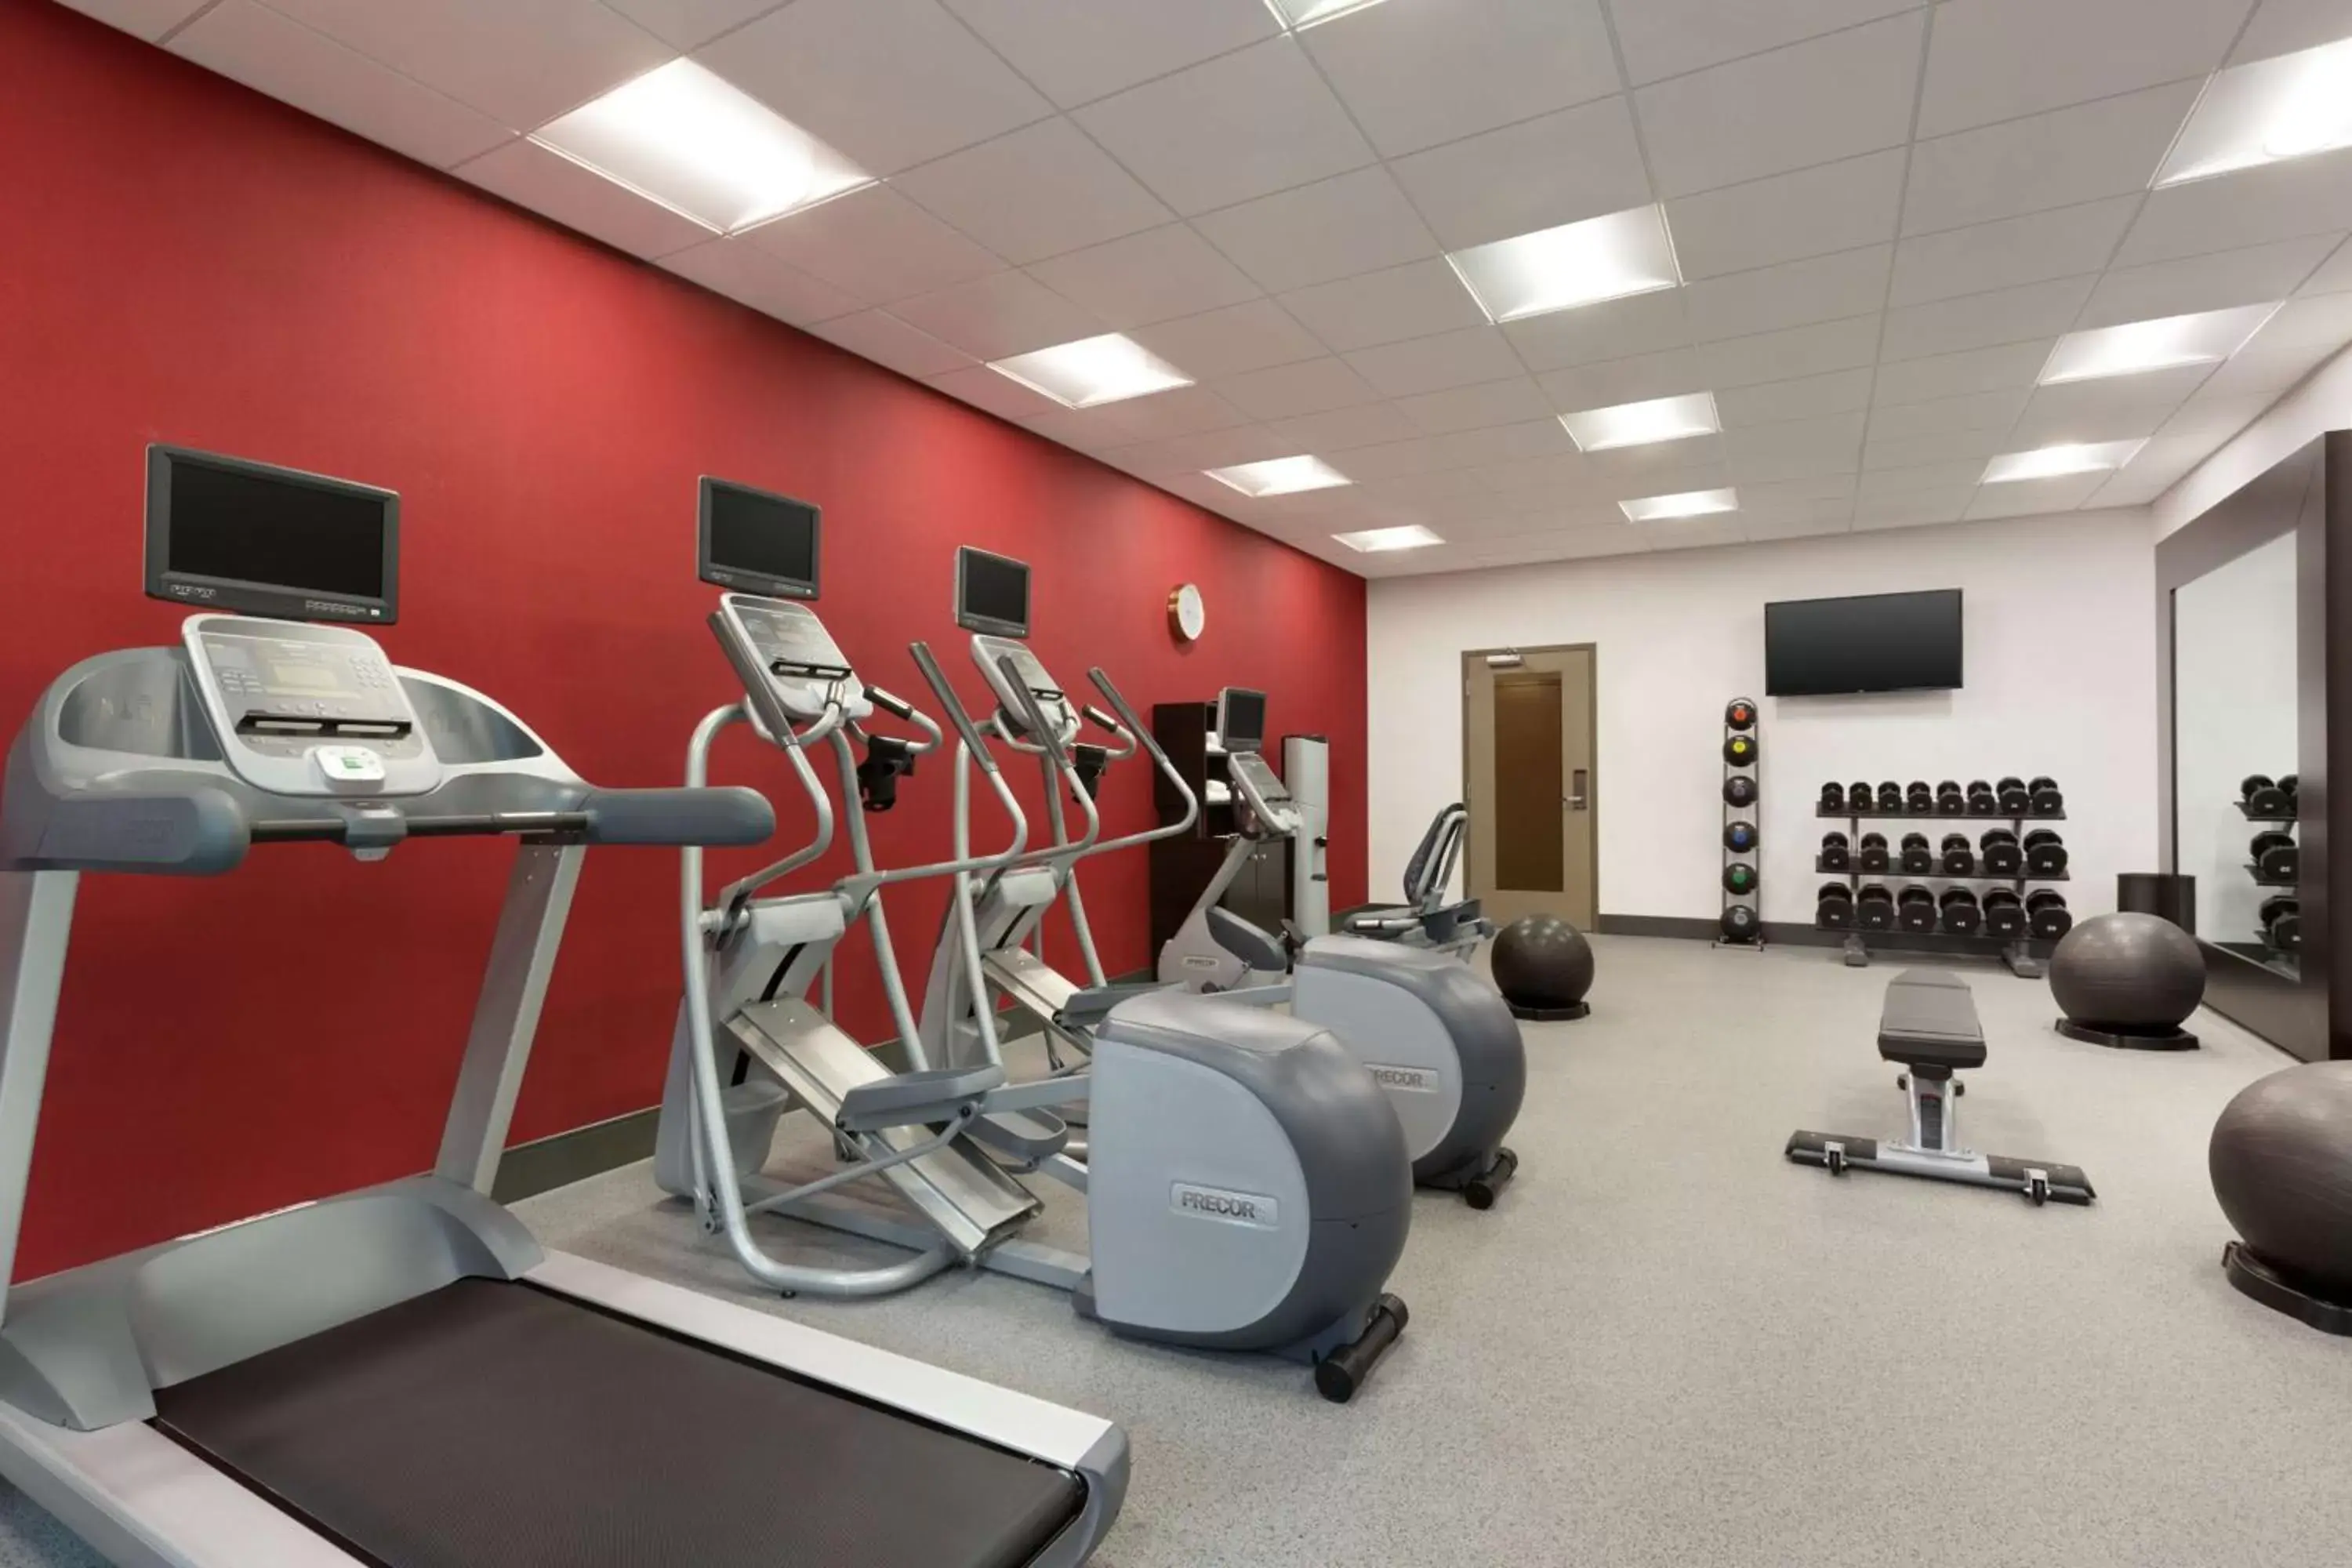 Fitness centre/facilities, Fitness Center/Facilities in Hilton Garden Inn Lompoc, Ca